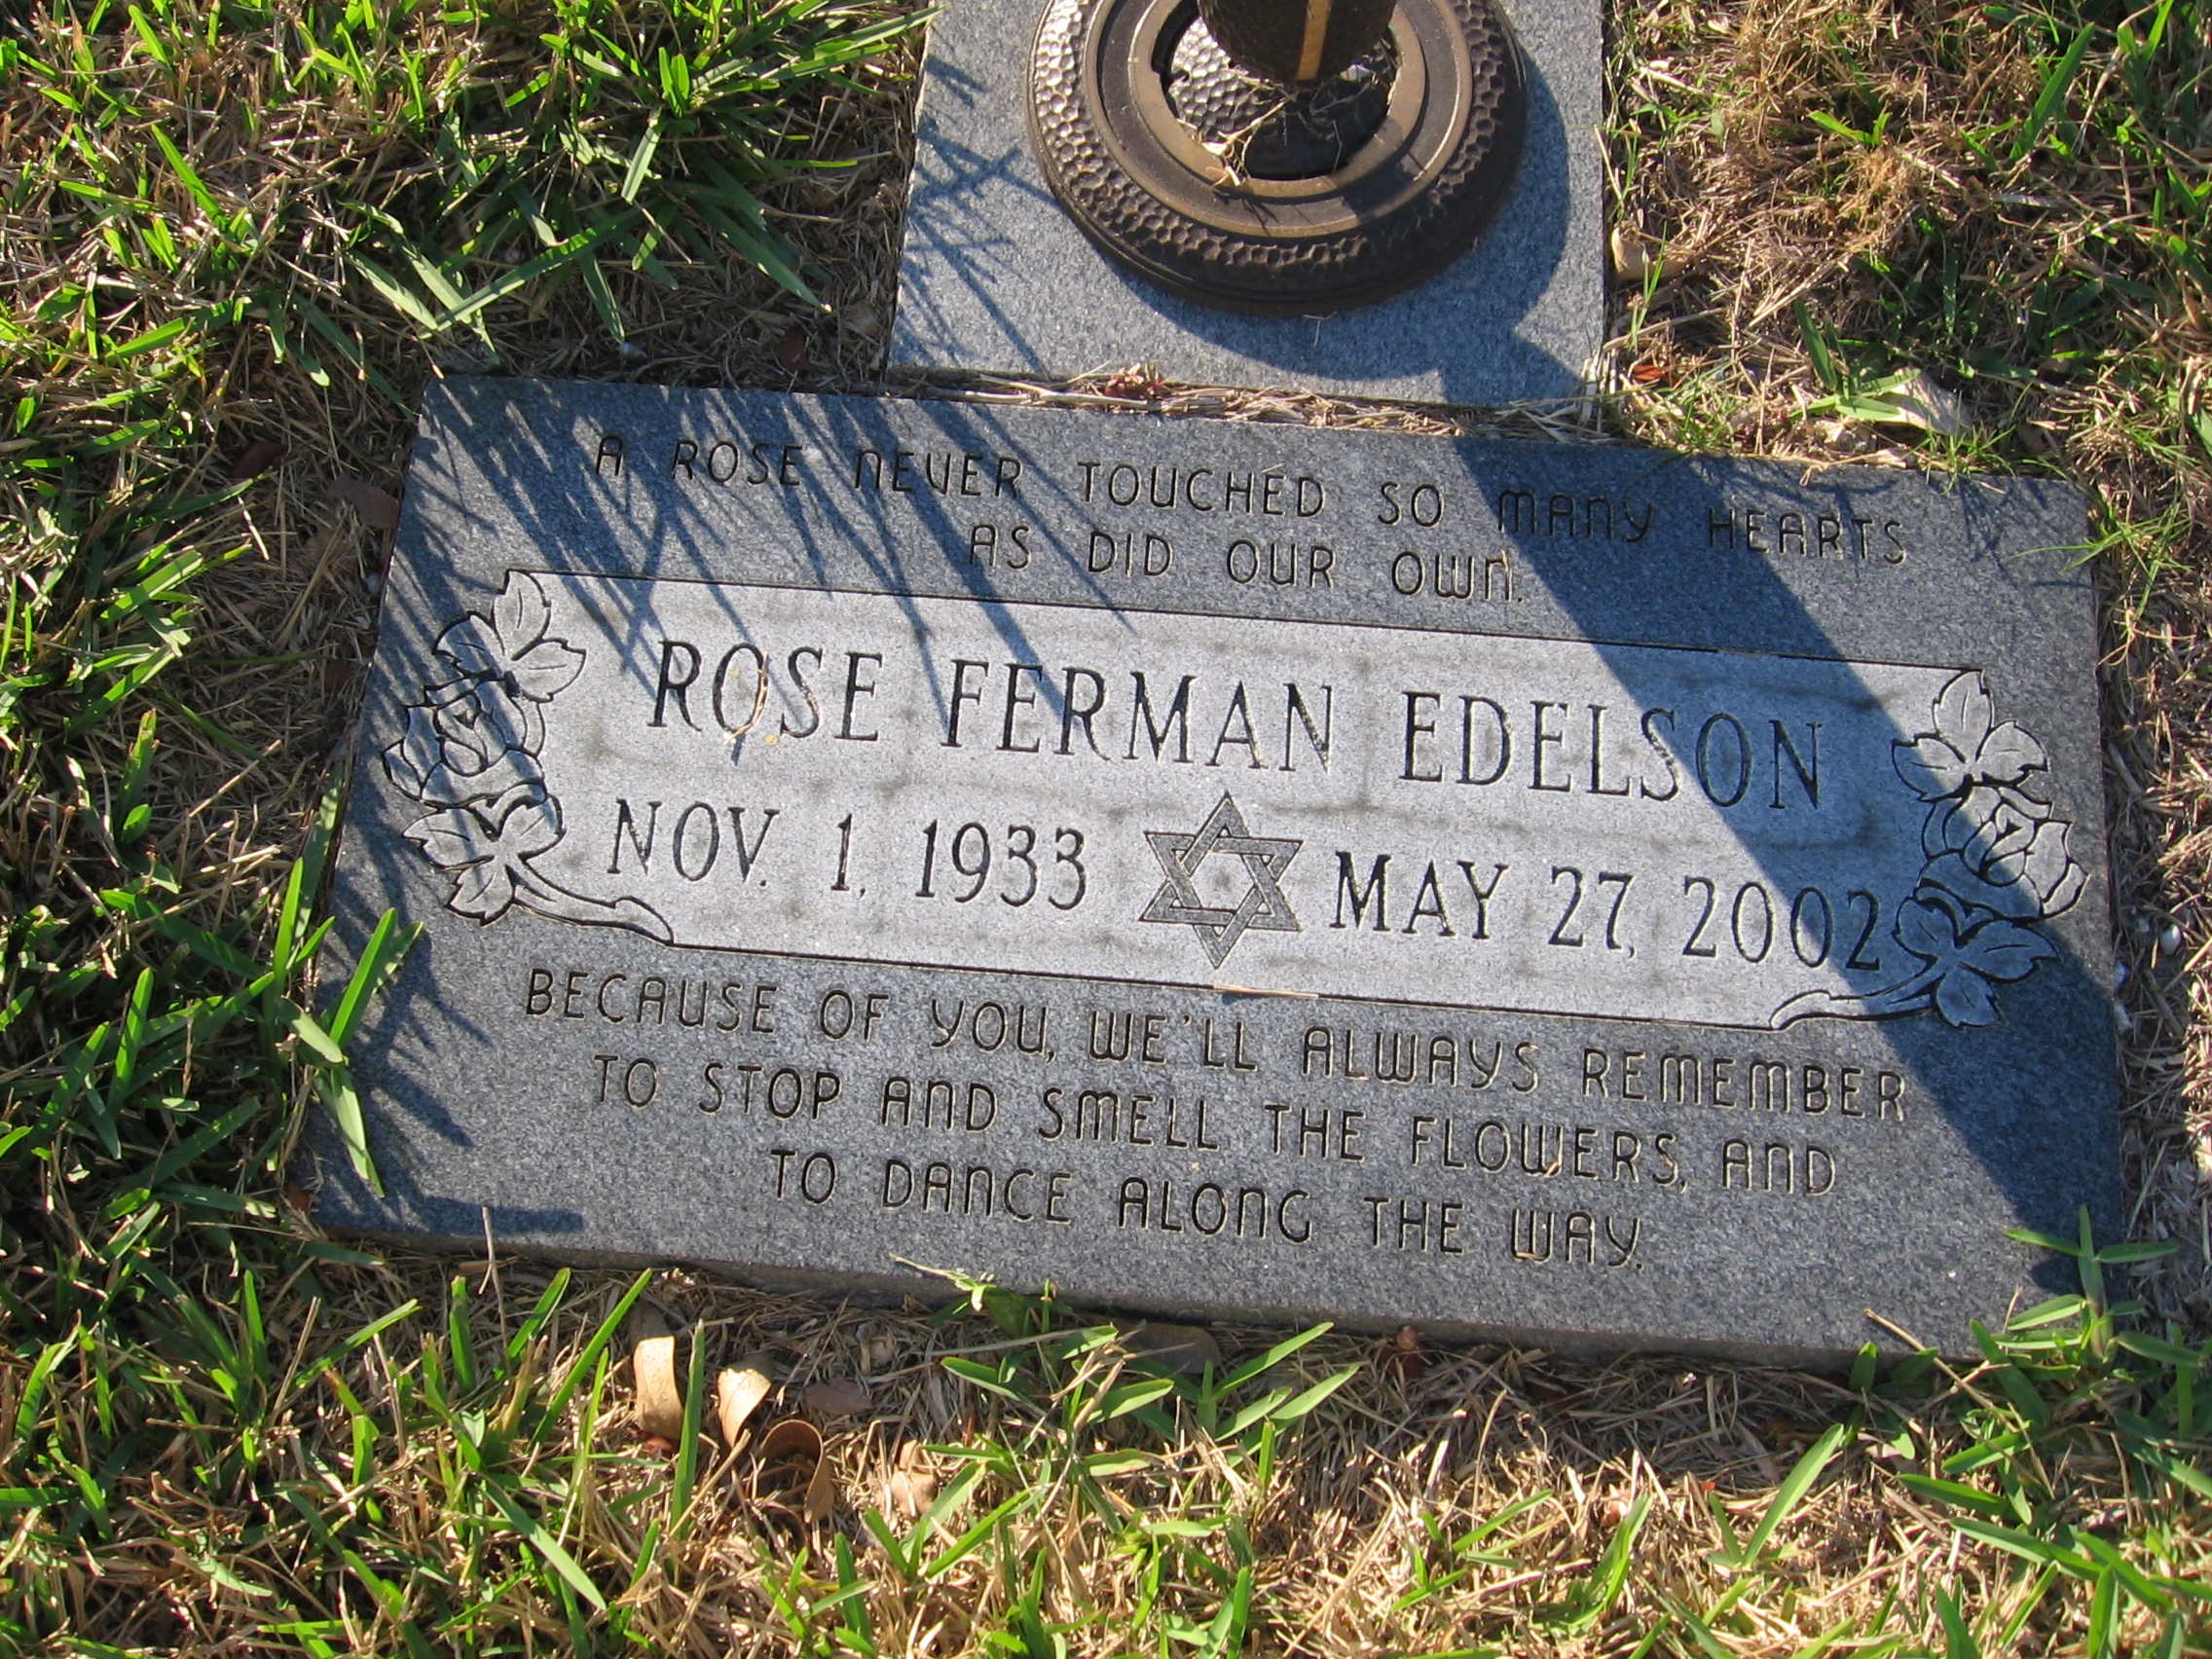 Rose Ferman Edelson